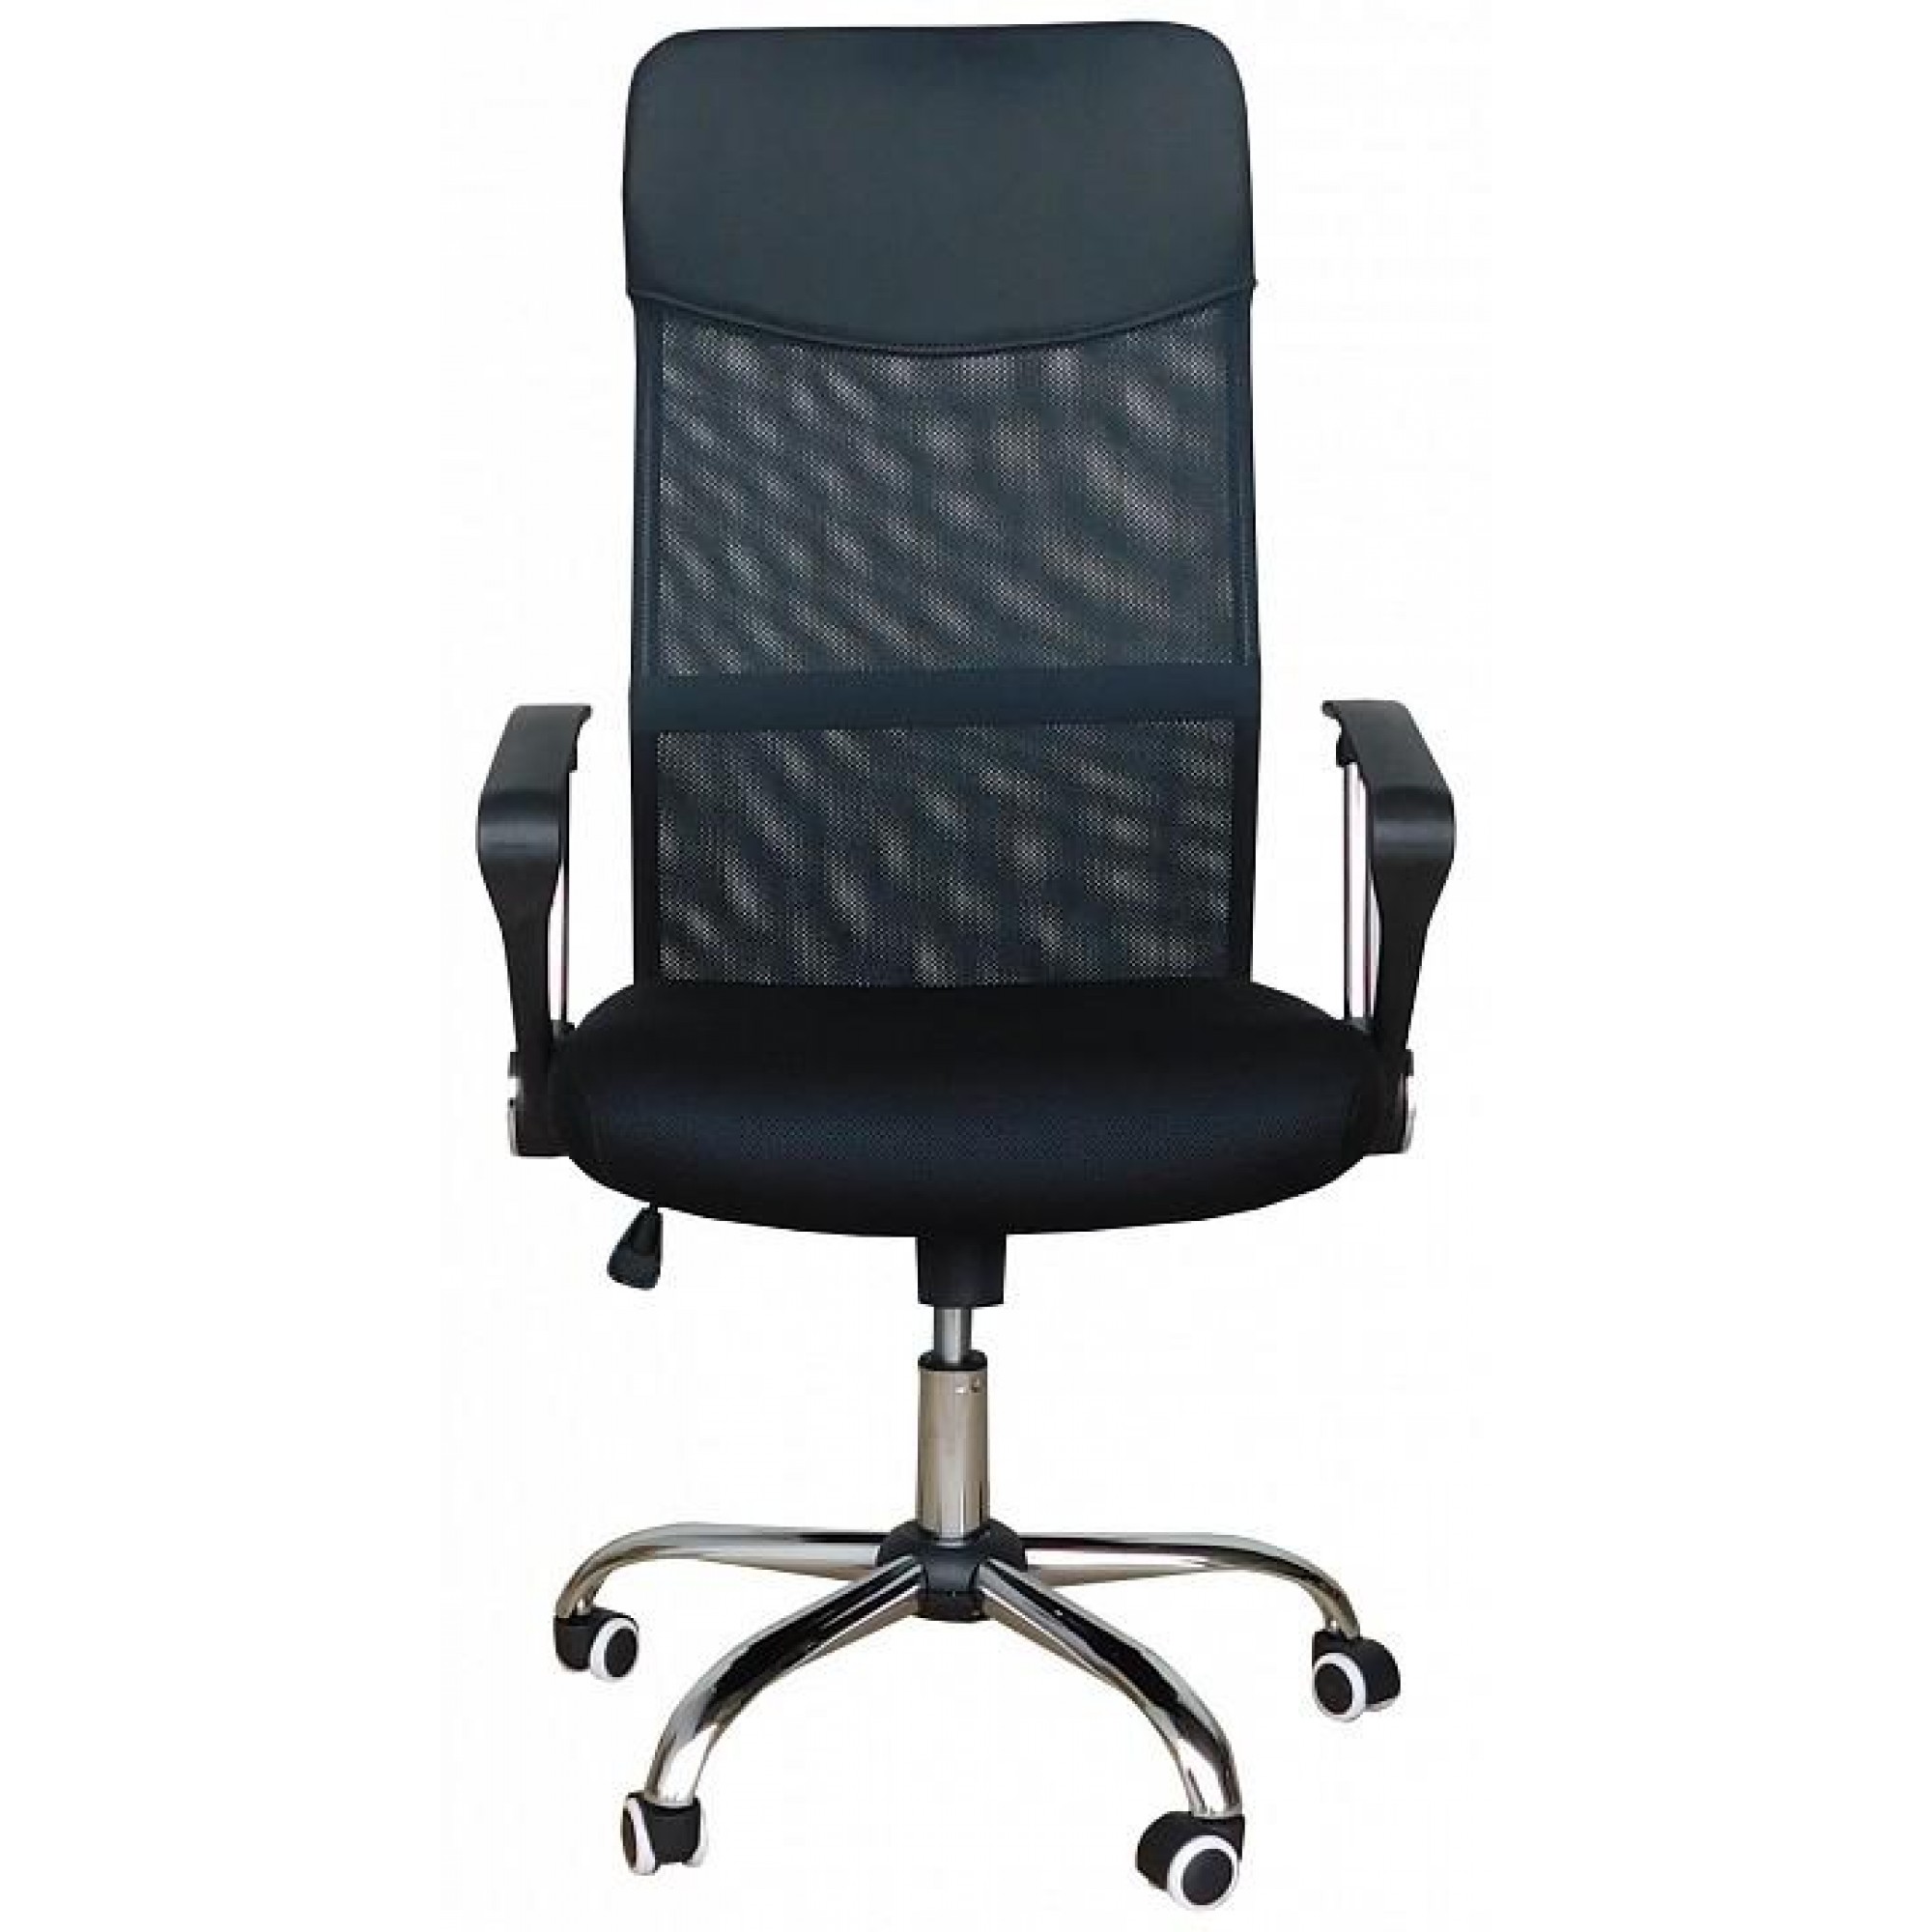 Кресло компьютерное MF-530 405431, MF-530 black